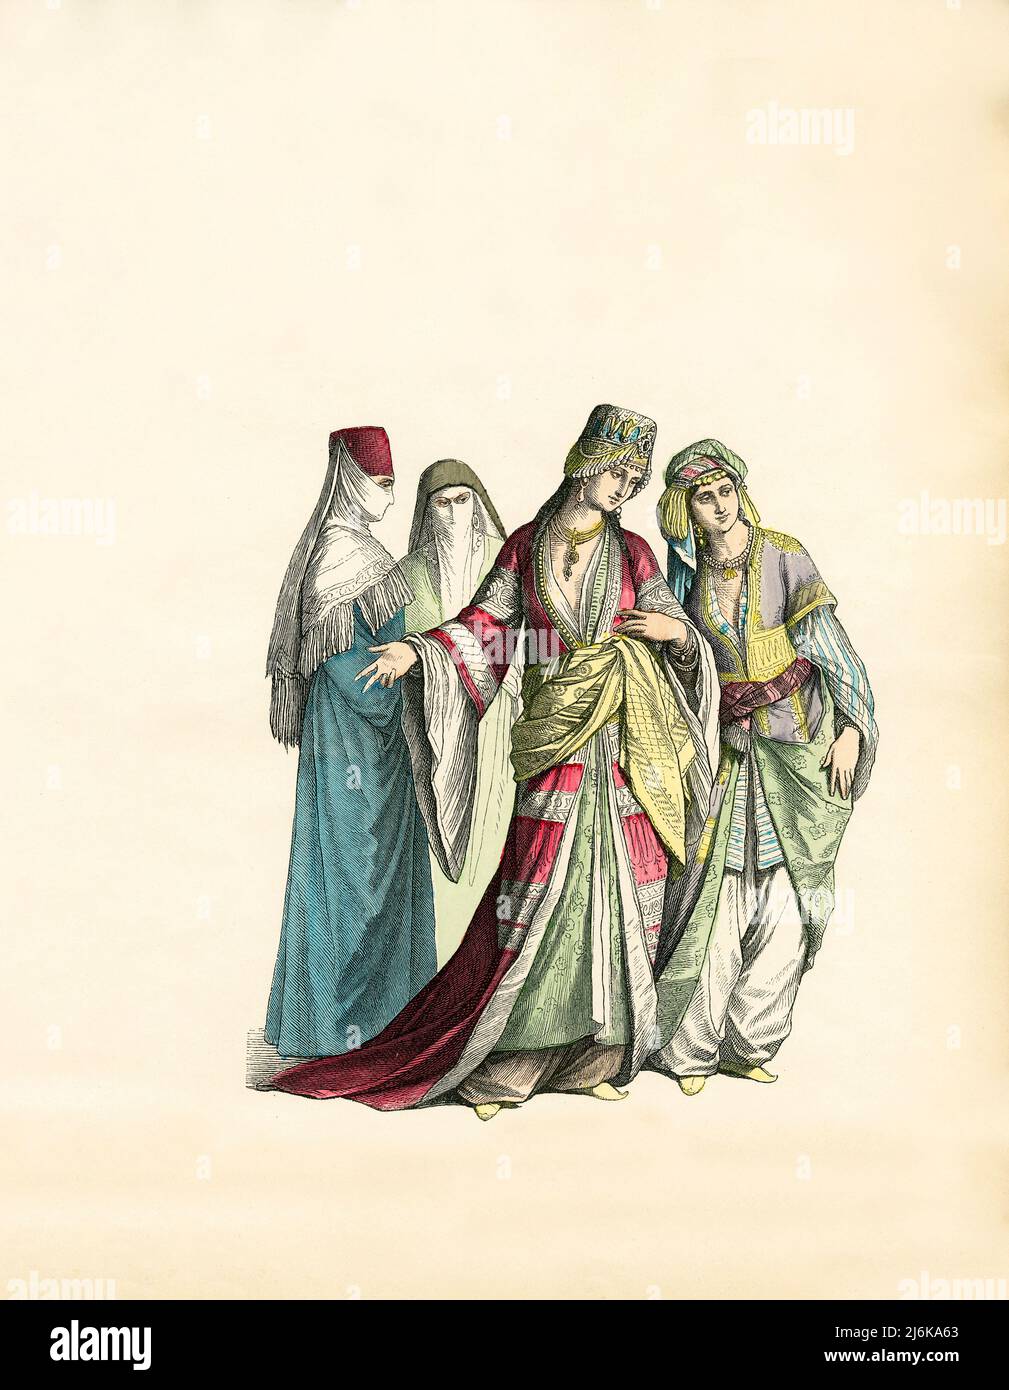 Femmes turques, Illustration, l'histoire du costume, Braun & Schneider, Munich, Allemagne, 1861-1880 Banque D'Images